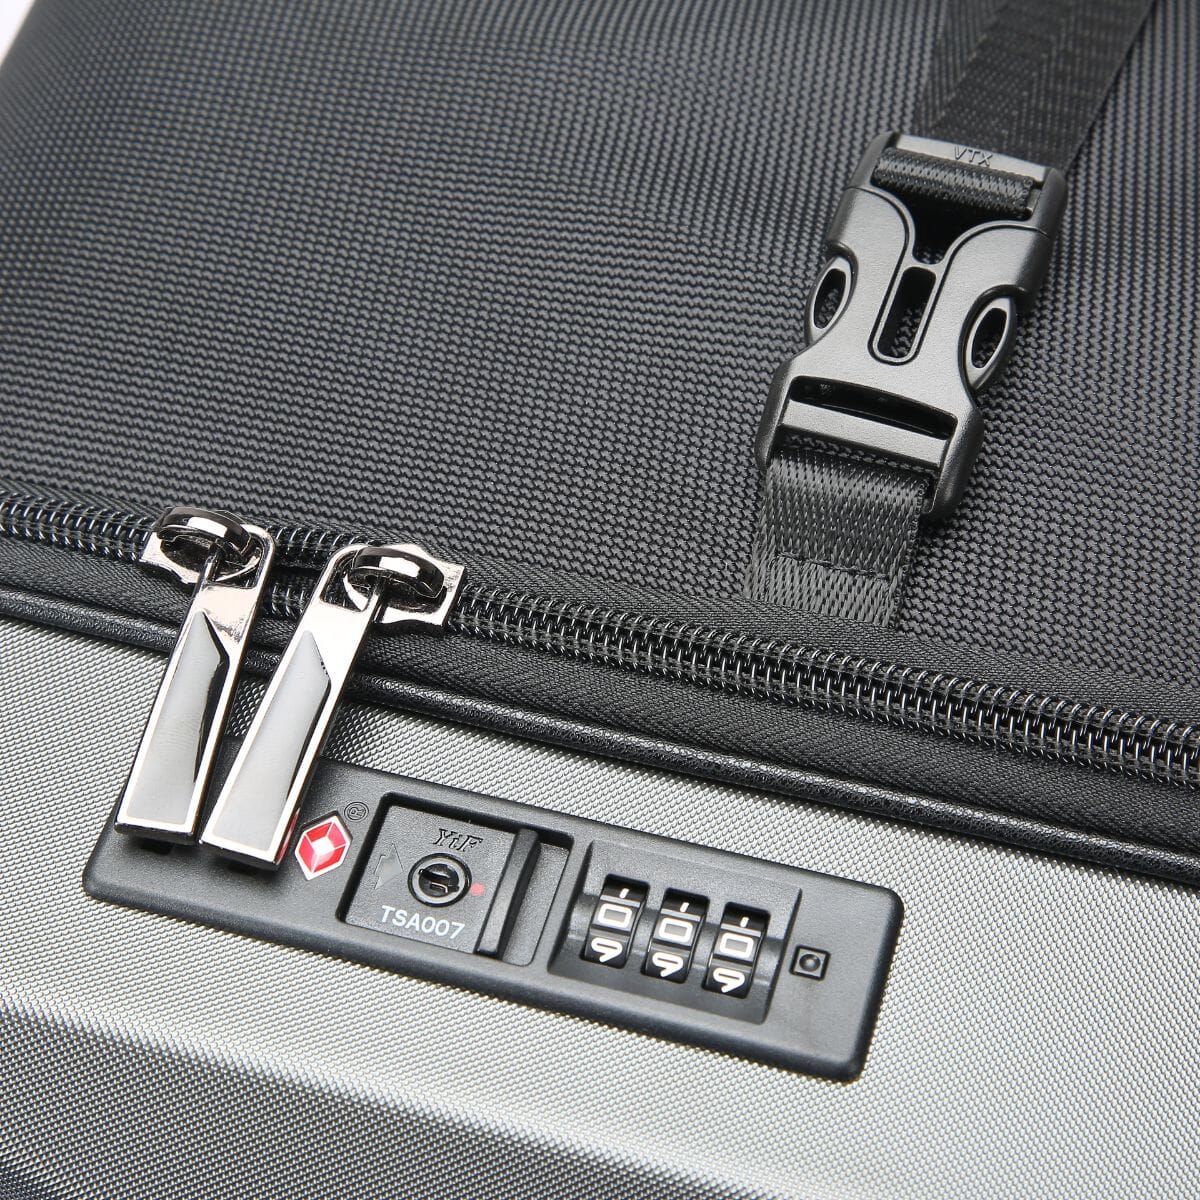 Zipper Locks $9.95  Stylish travel bag, Zipper lock, Anti theft